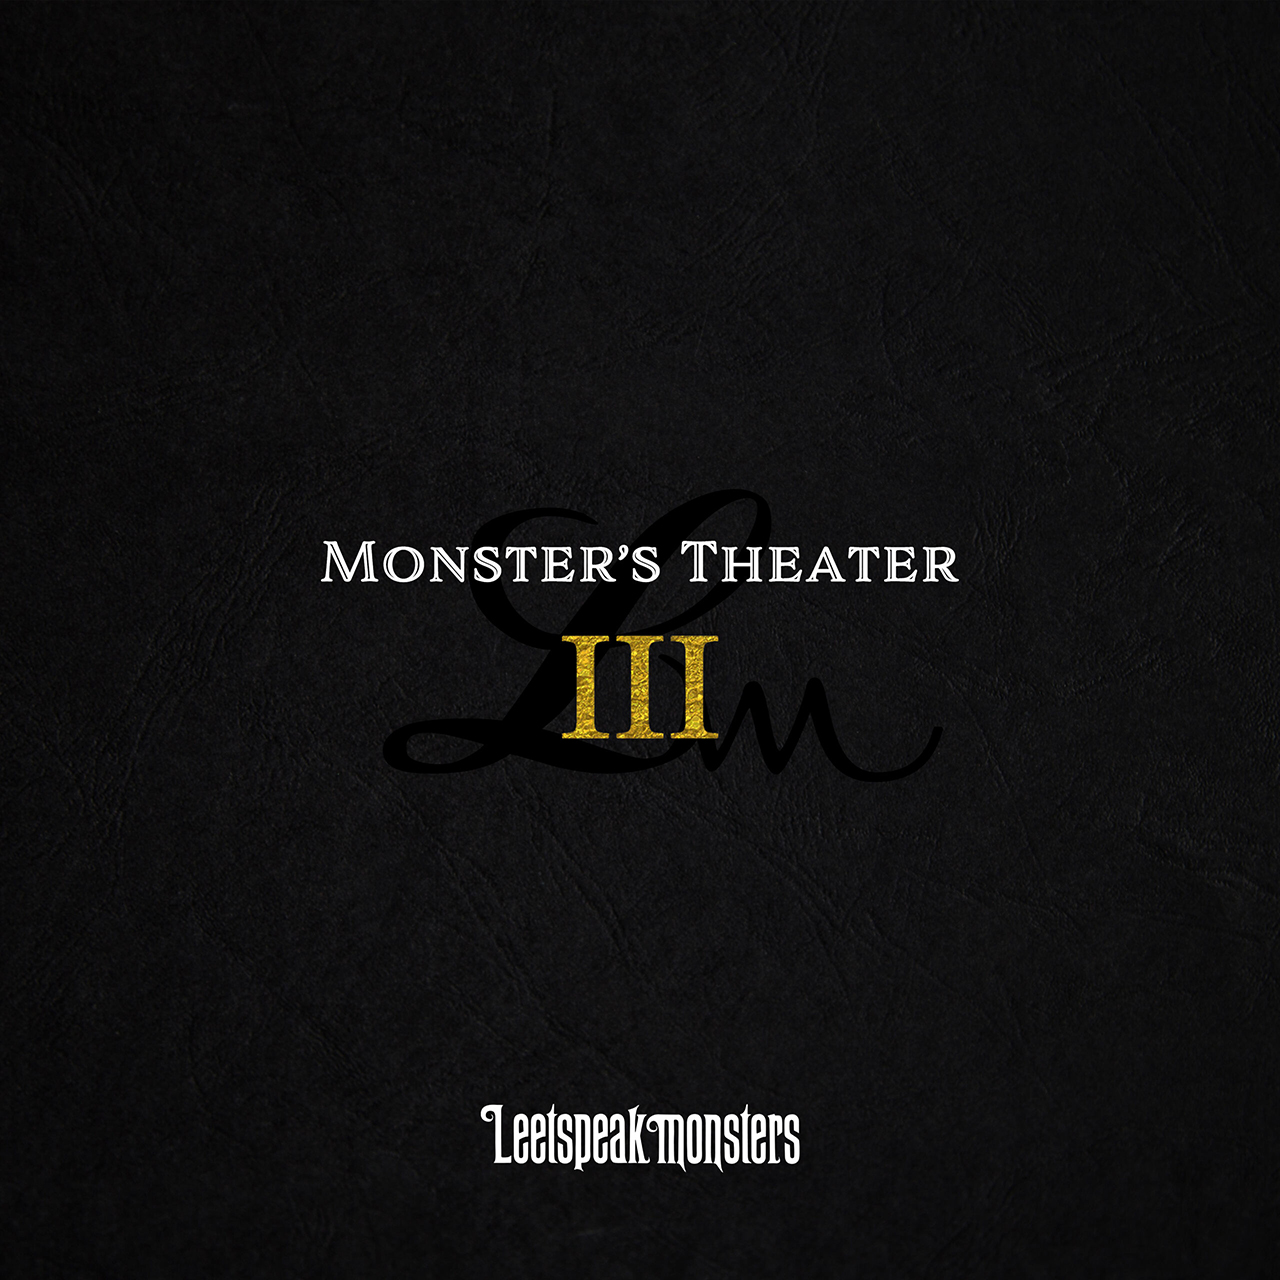 Leetspeak monstersオフィシャルホームページ